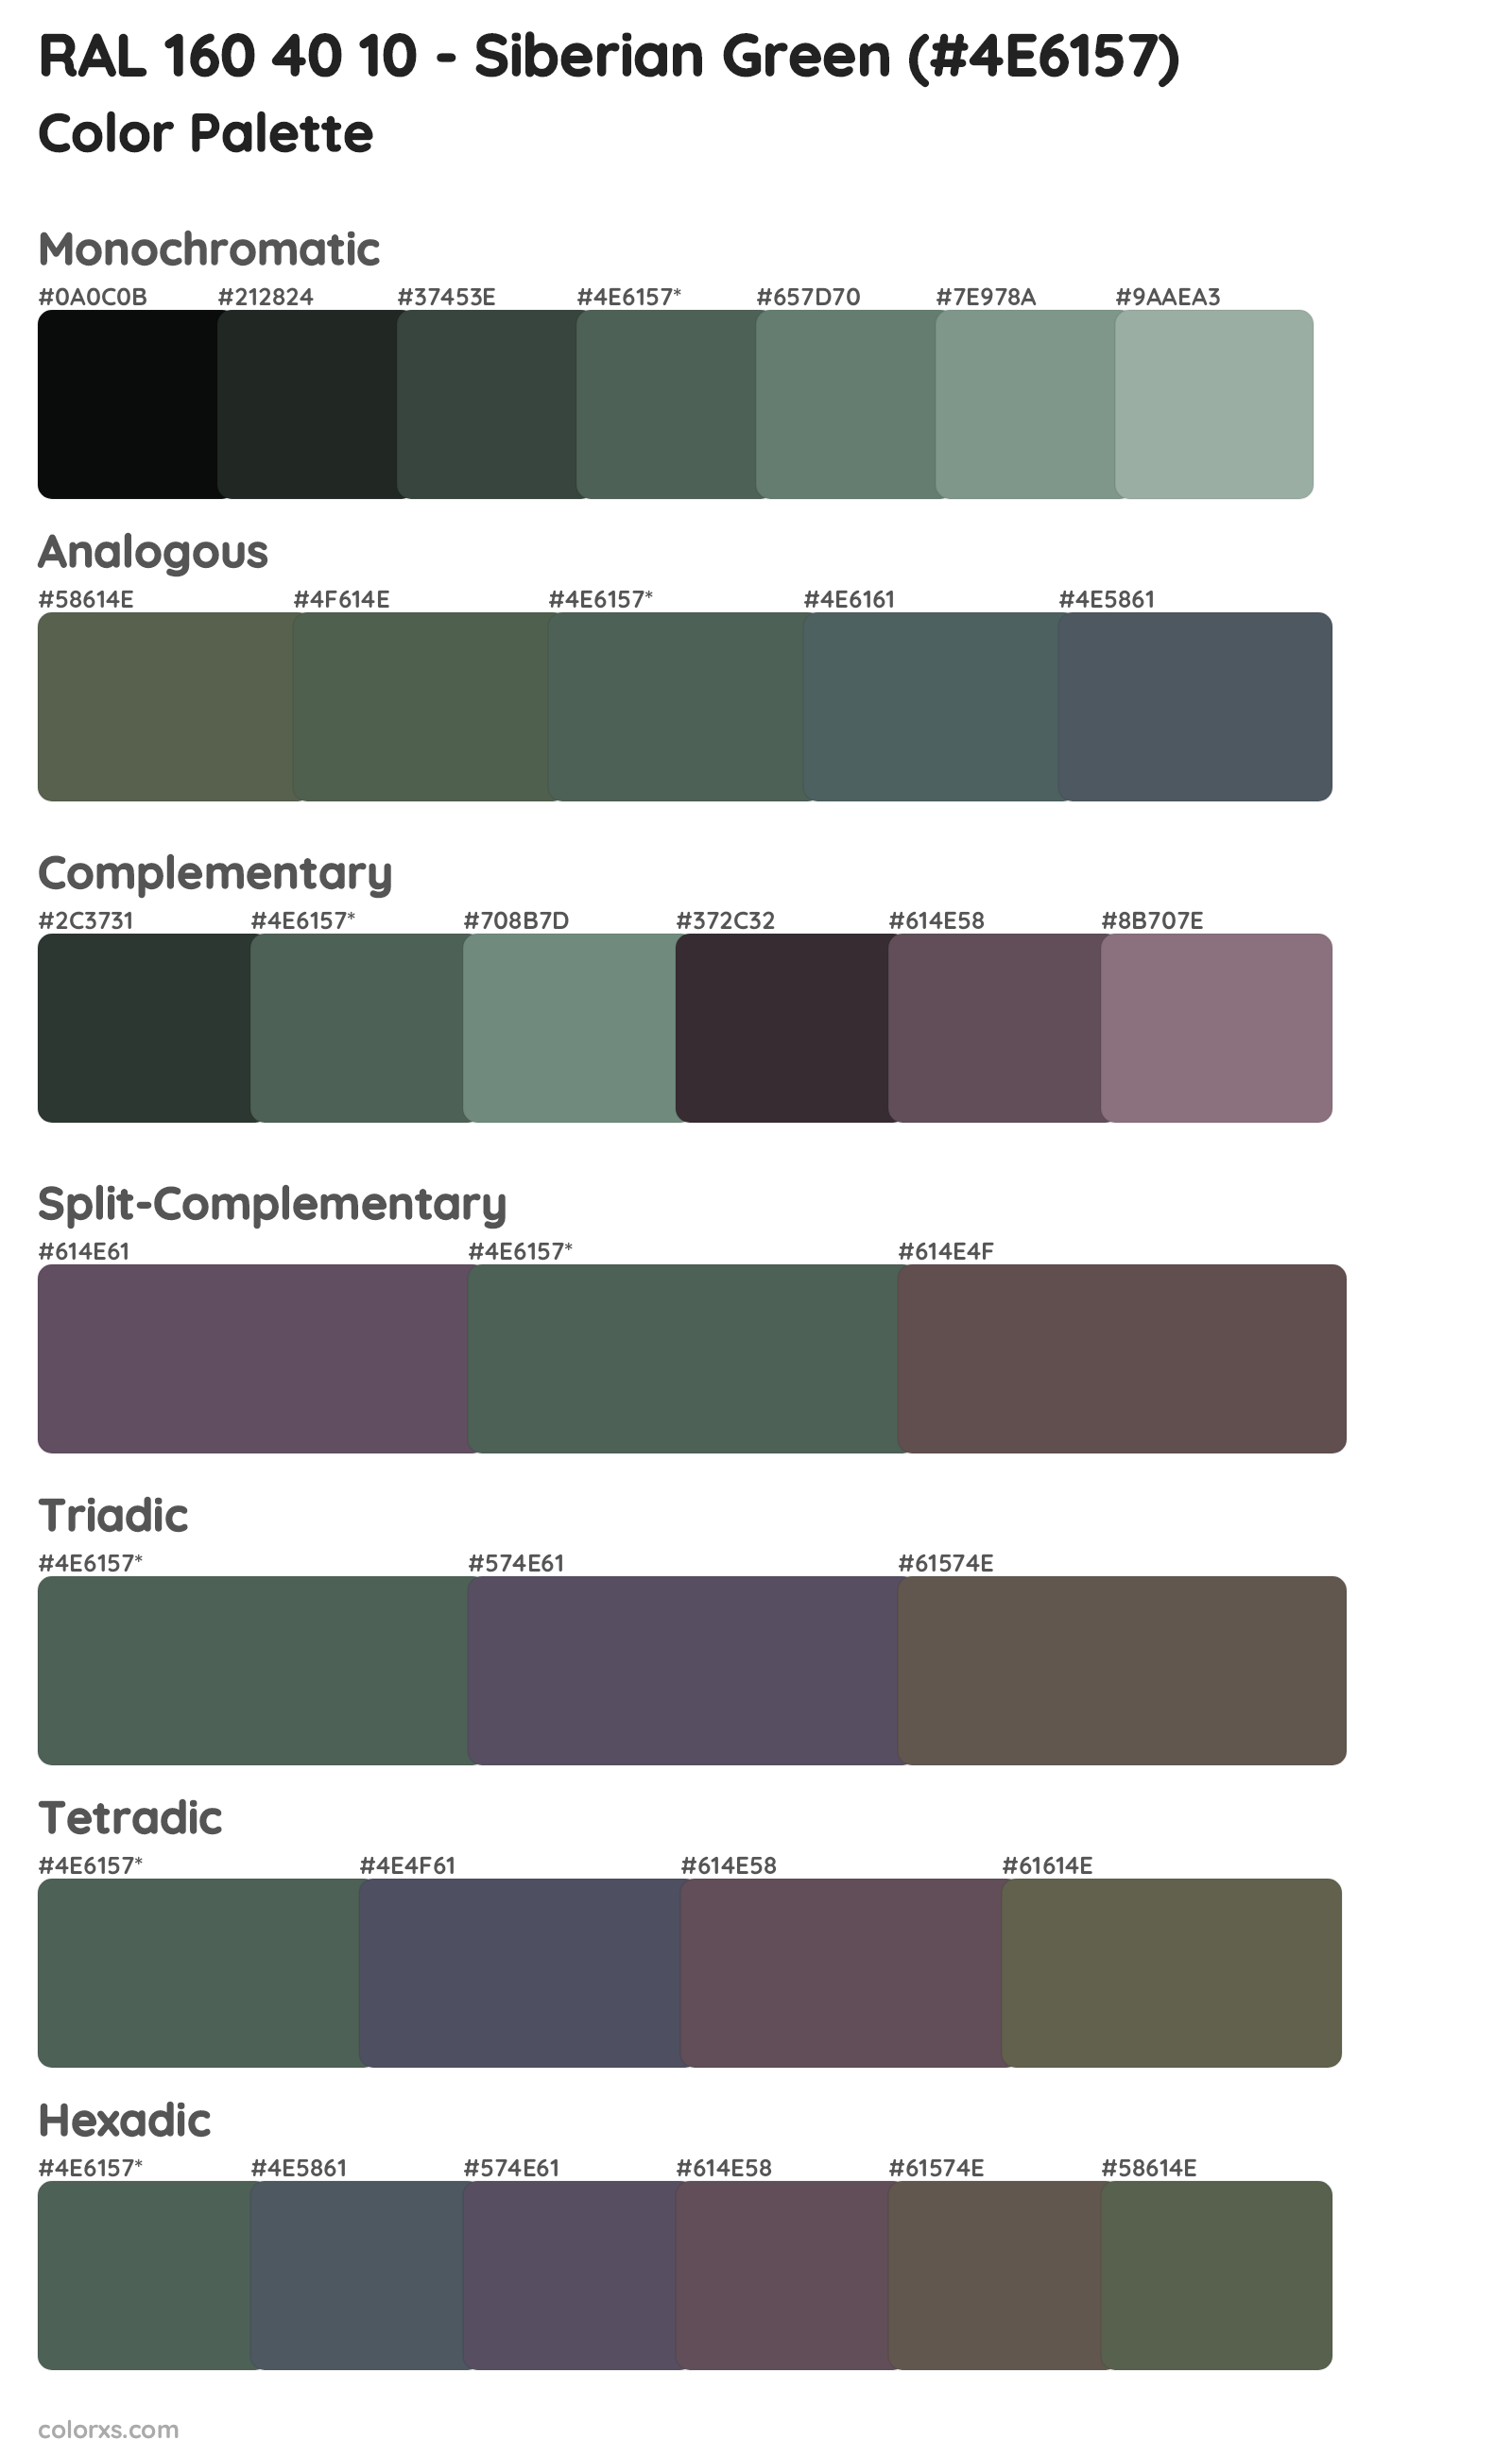 RAL 160 40 10 - Siberian Green Color Scheme Palettes